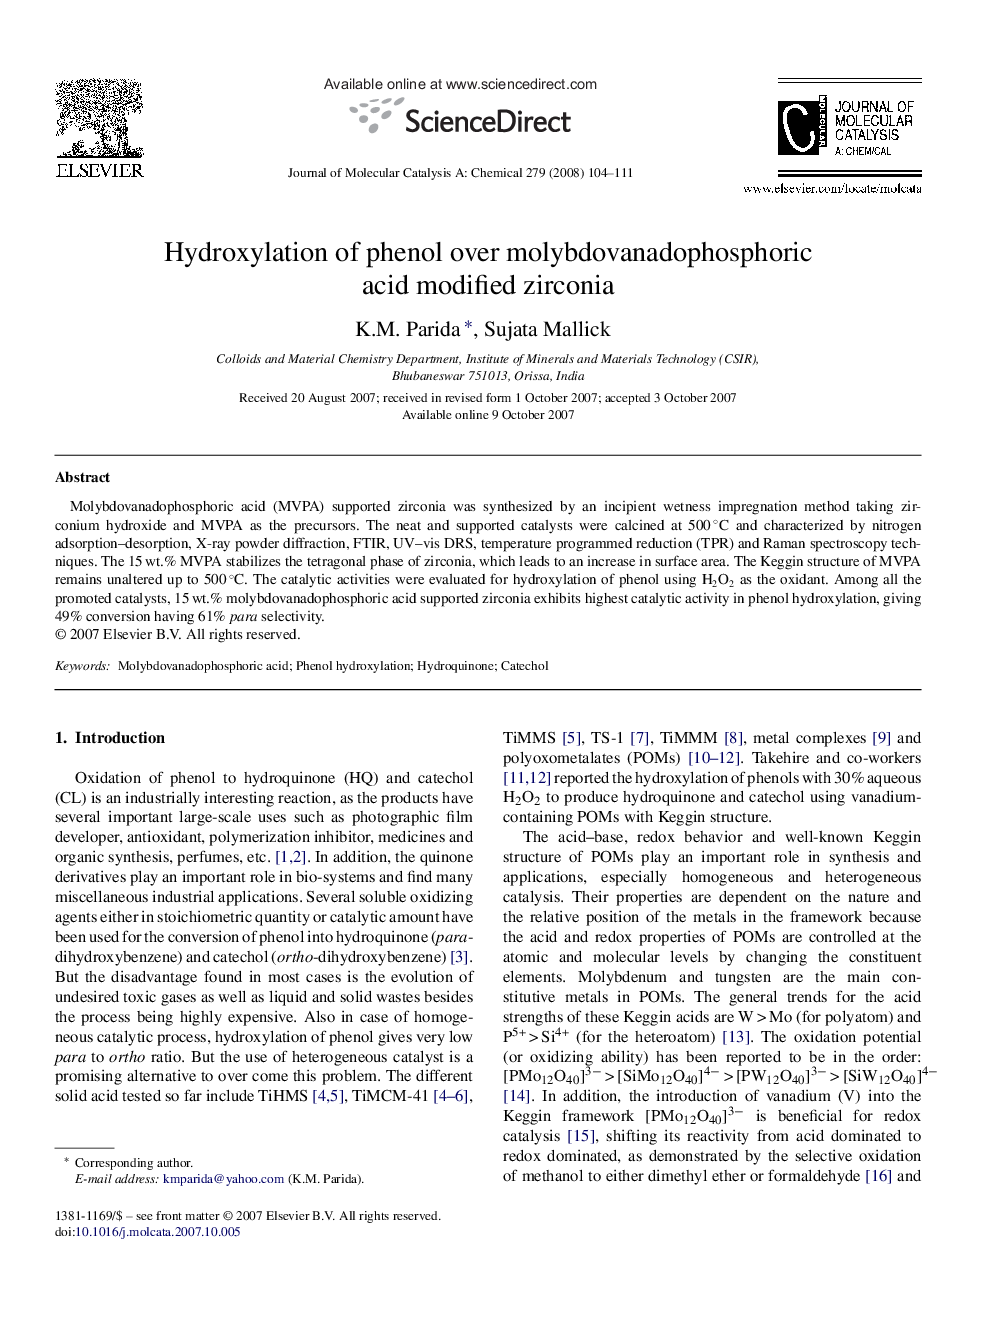 Hydroxylation of phenol over molybdovanadophosphoric acid modified zirconia